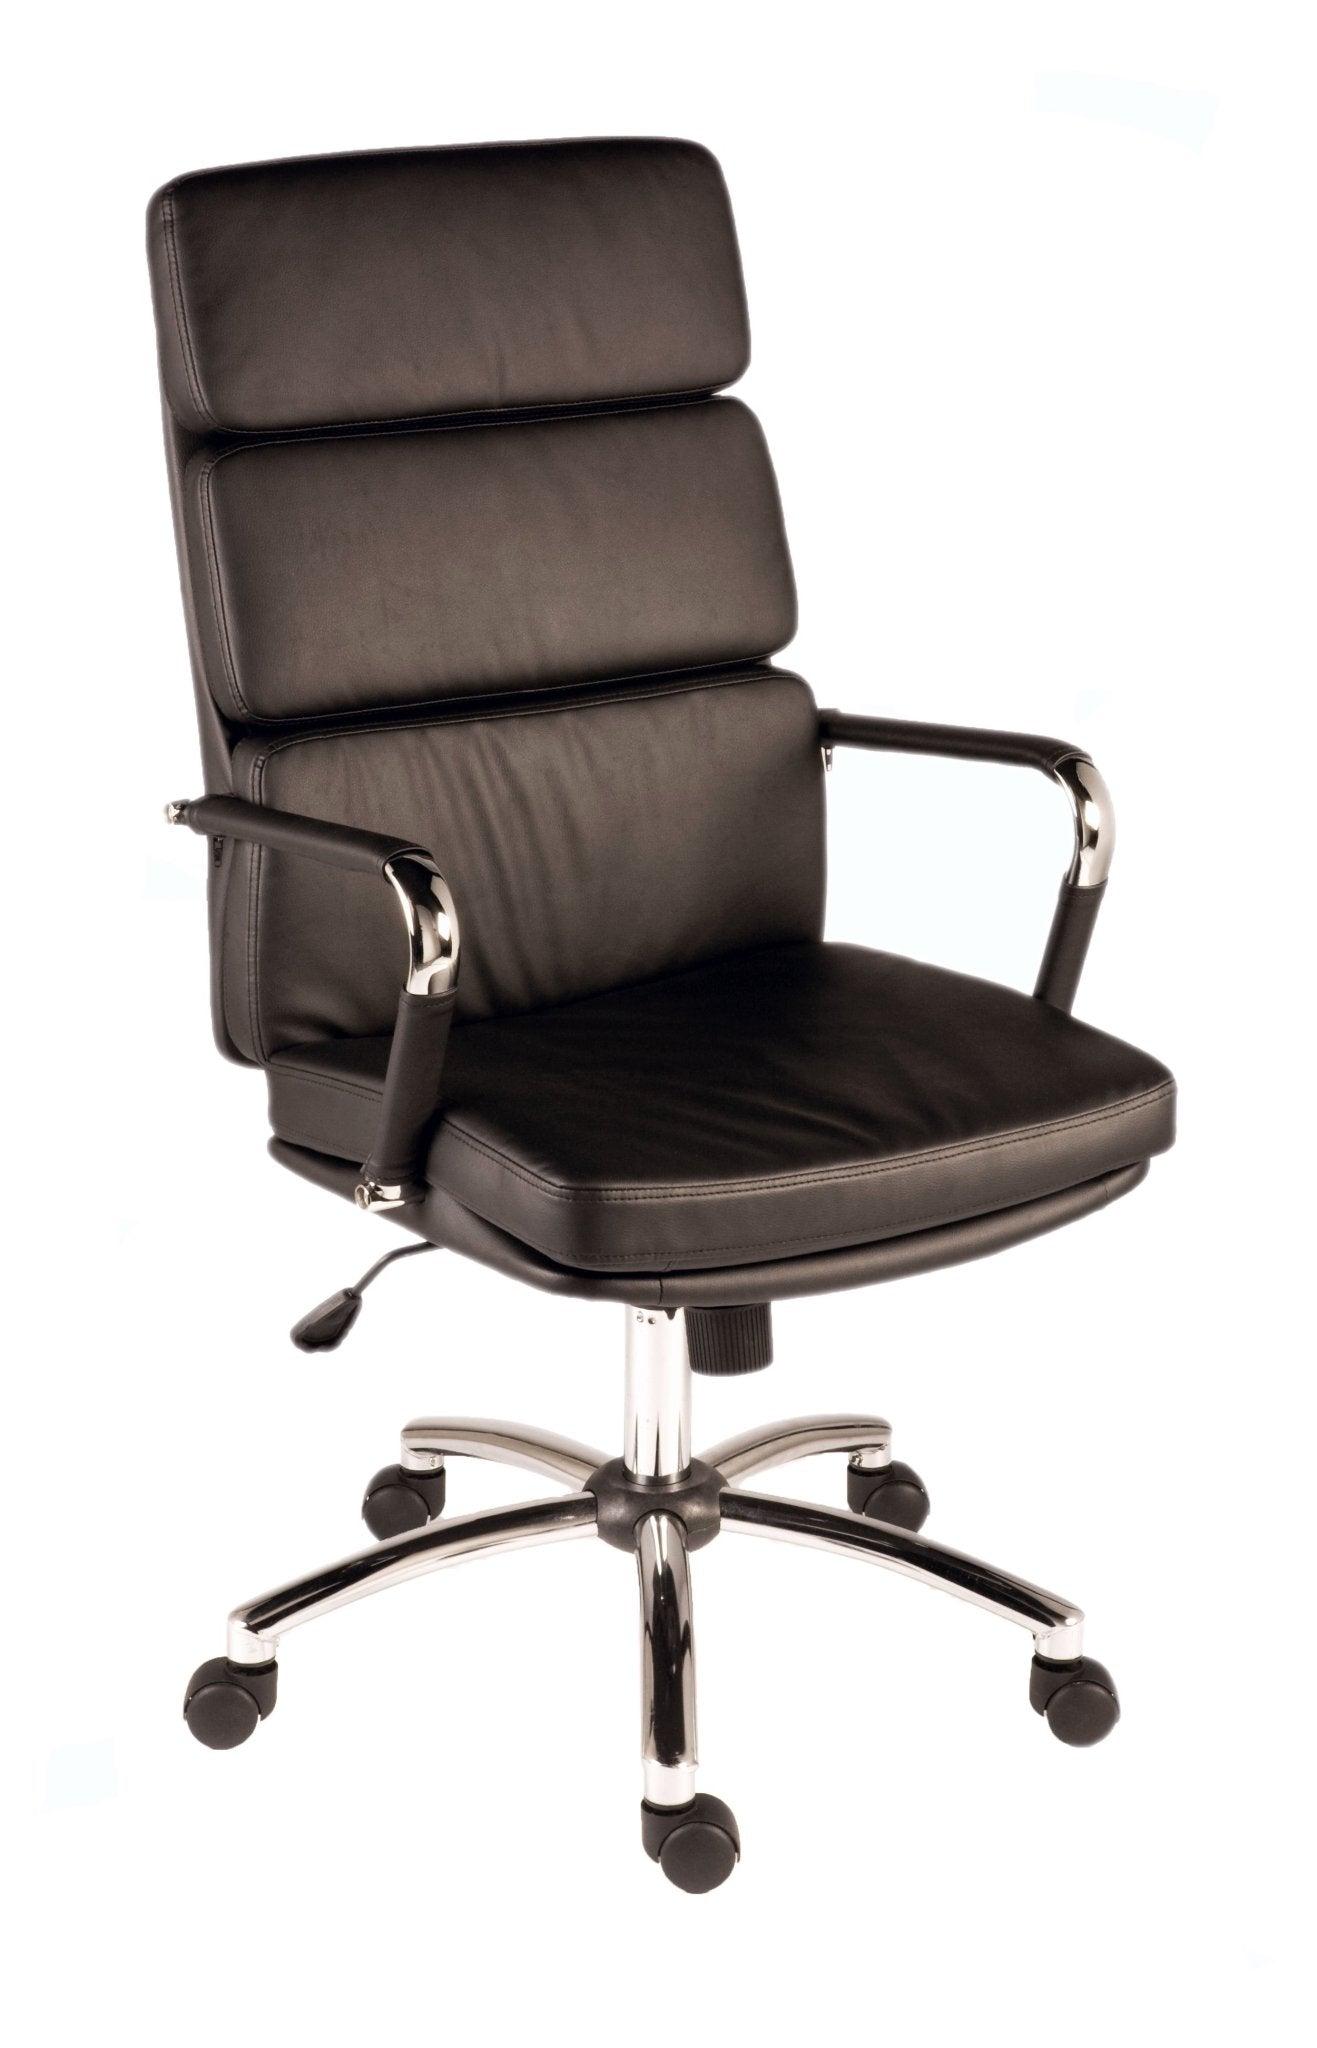 Deco executive office chair (black) - crimblefest furniture - image 1